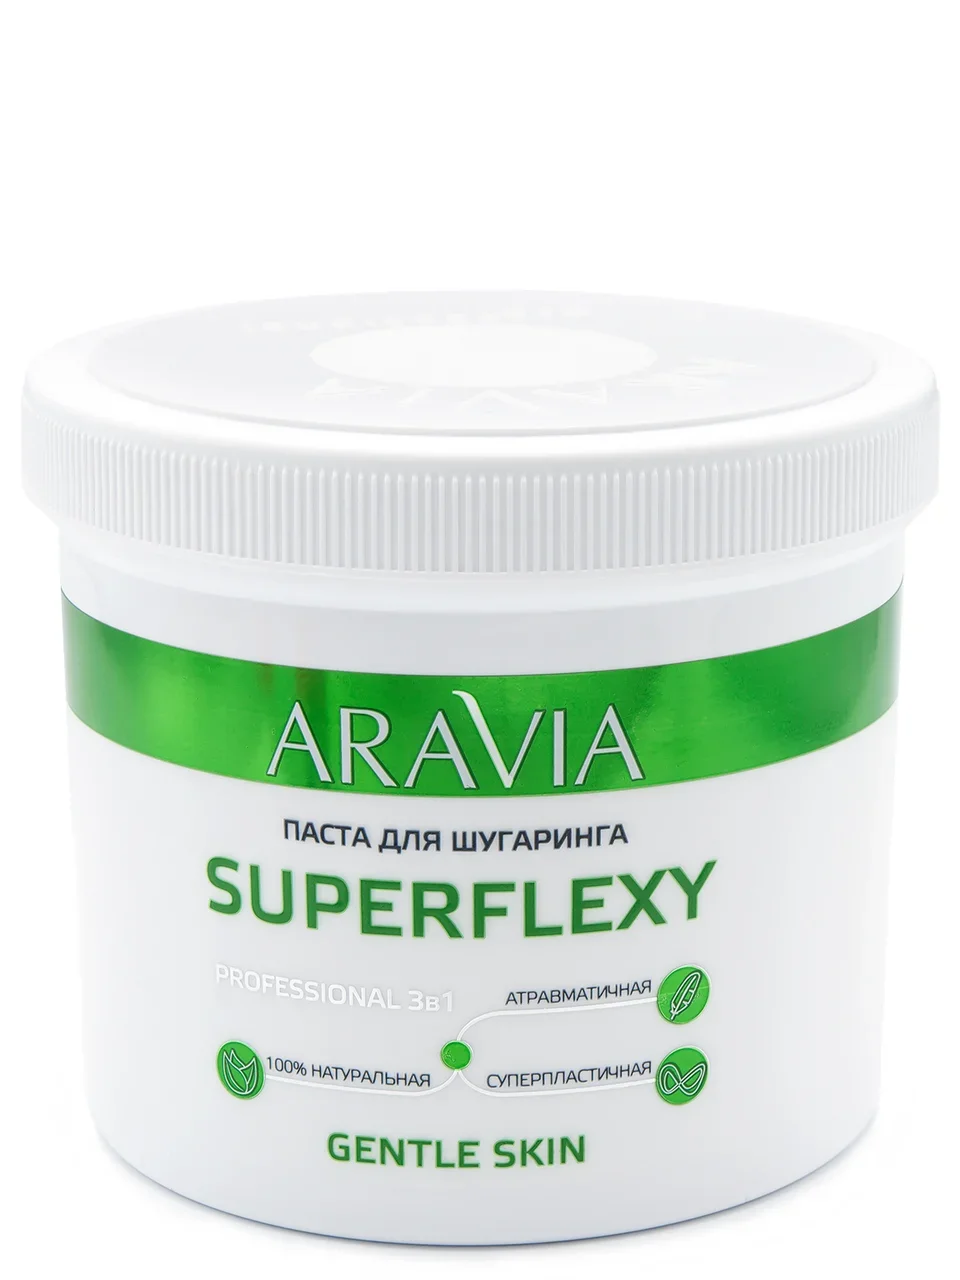 Паста для шугаринга Aravia Professional Superflexy Gentle Skin 750 г паста для шугаринга superflexy pure gold